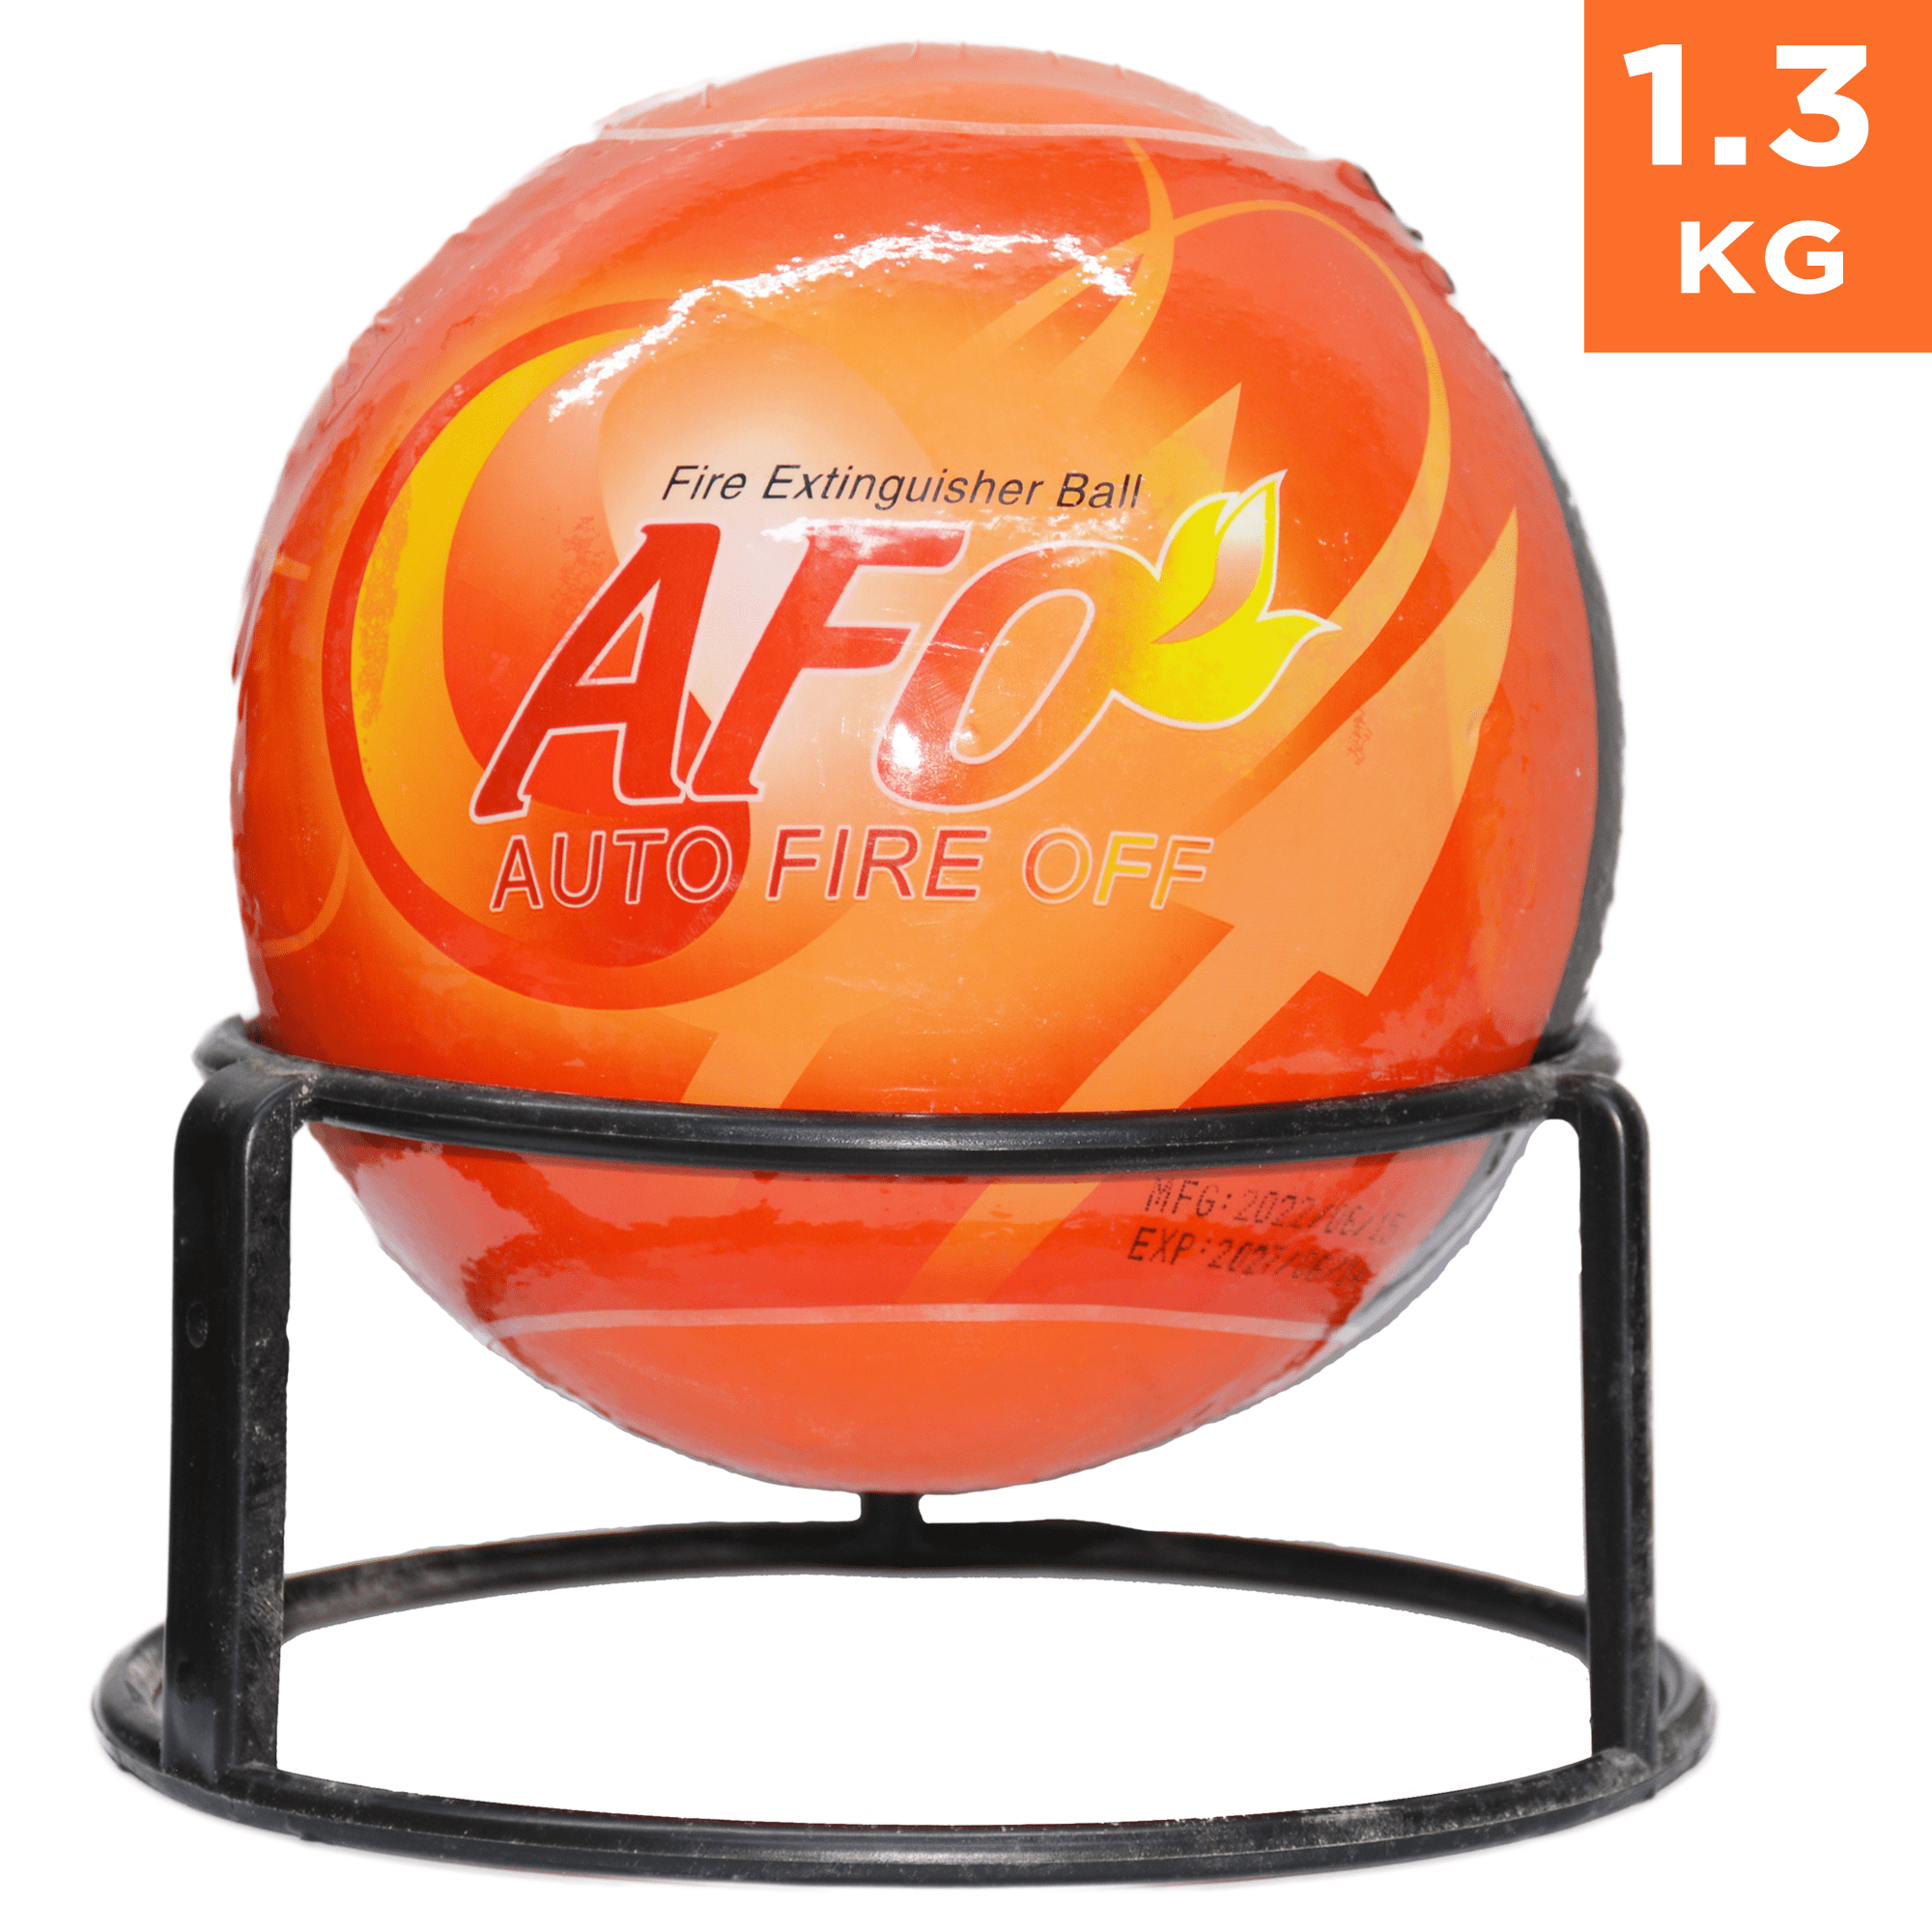 Afo Fire Ball / Elide Fire Extinguisher Ball - China Afo Fire Ball